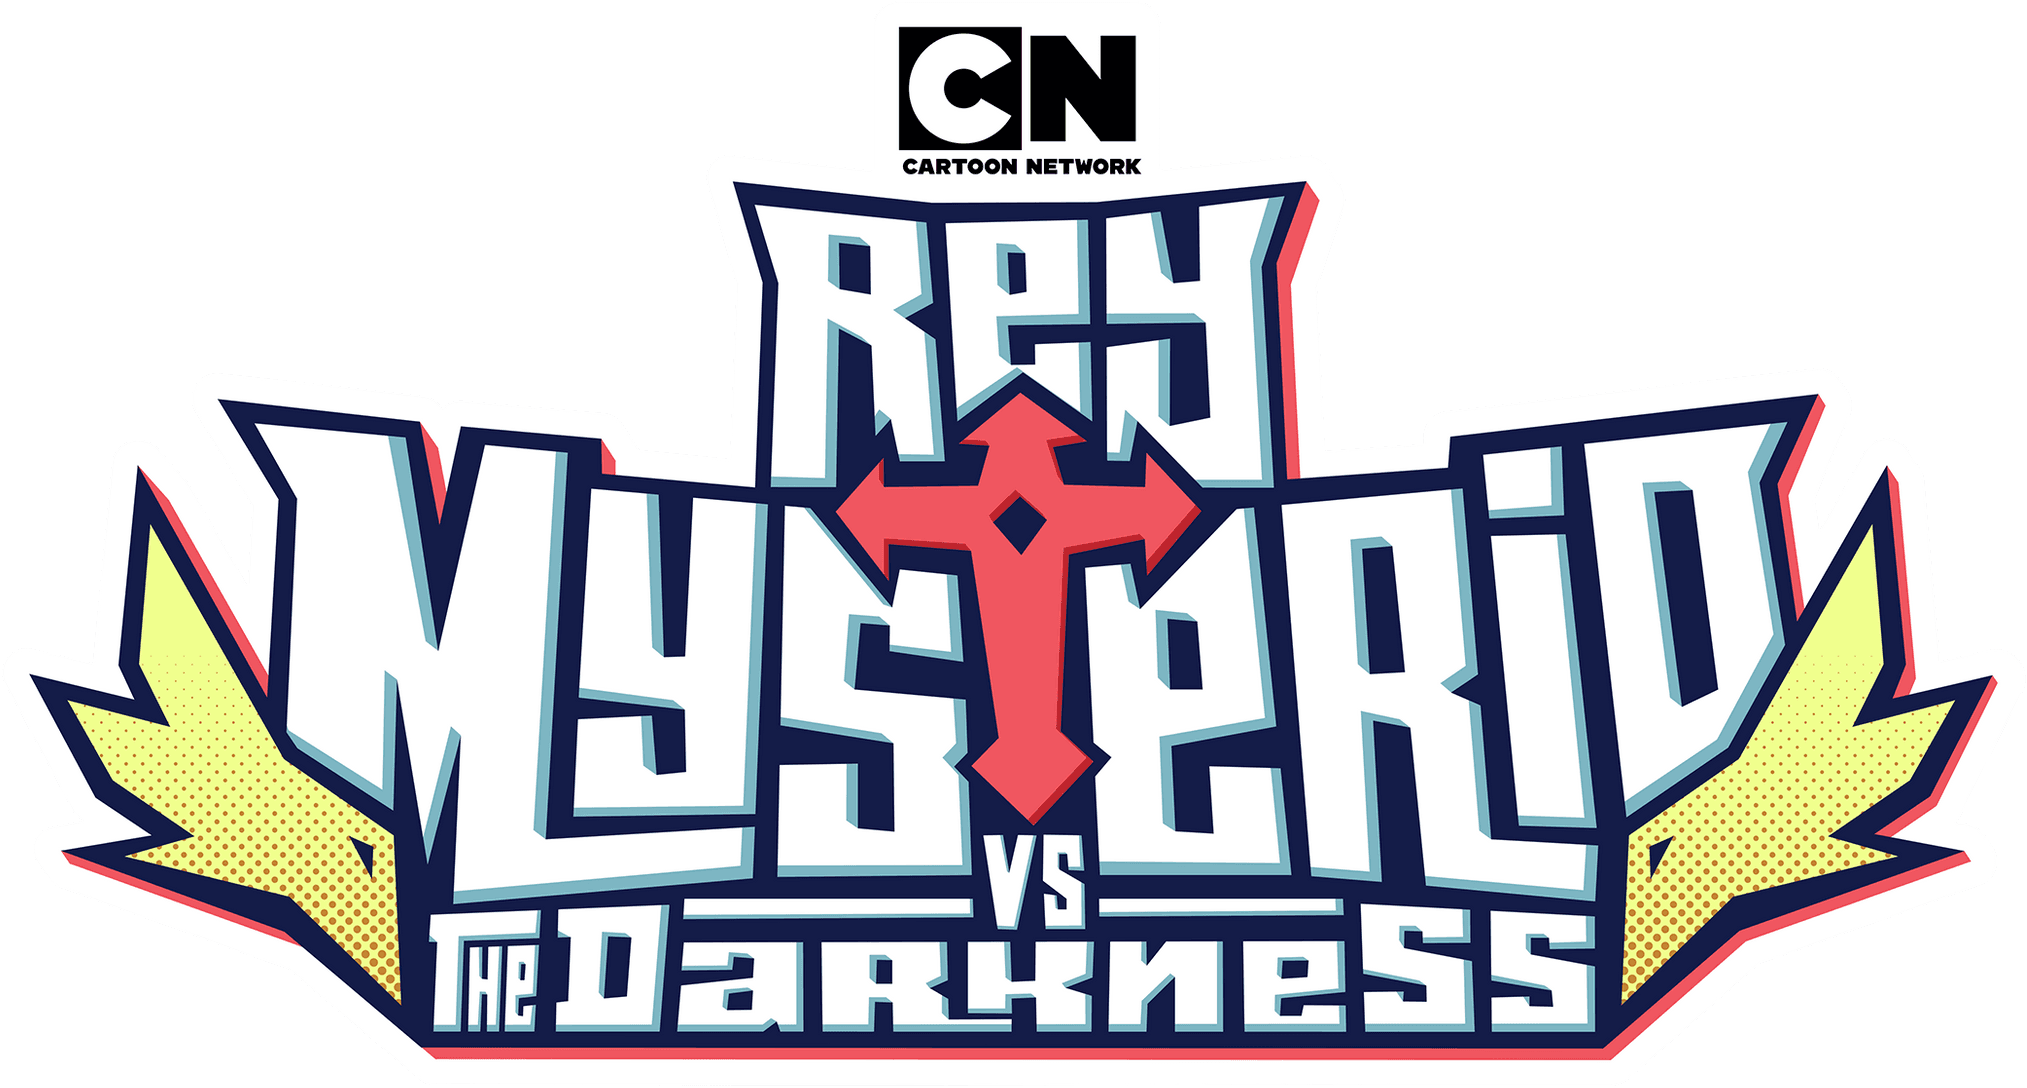 Rey Mysterio vs The Darkness logo